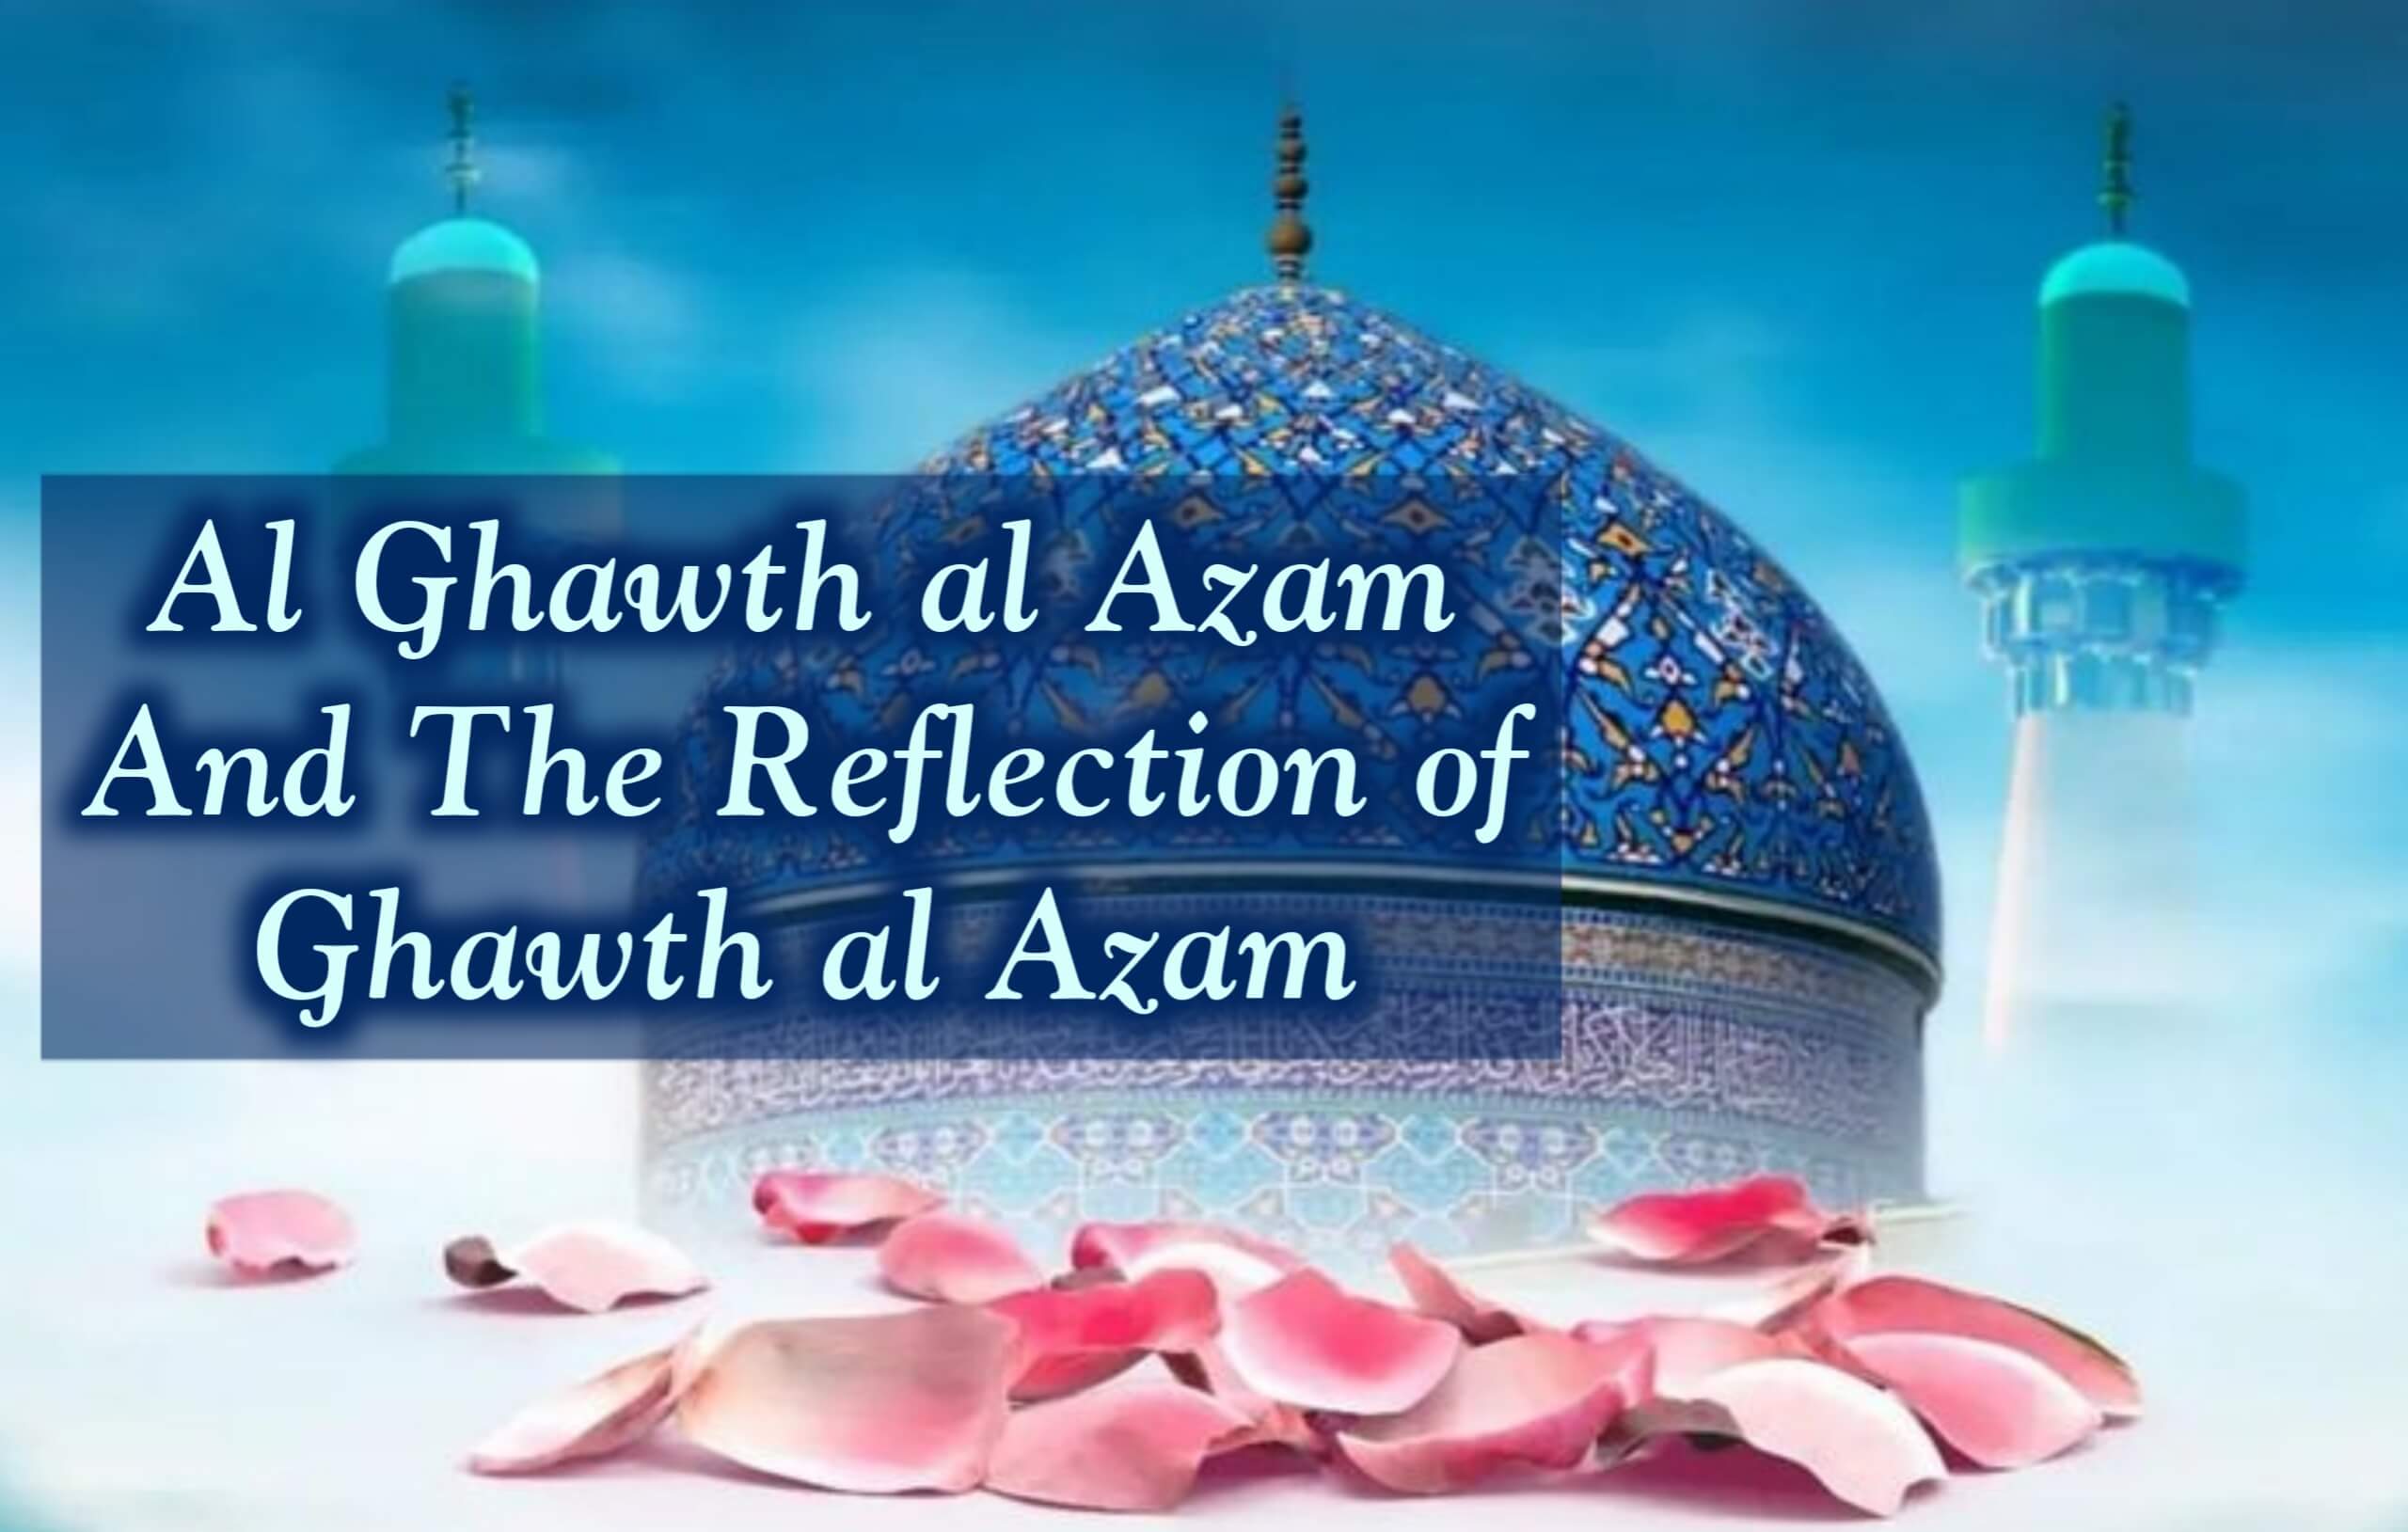 Ghawth al Azam mazar